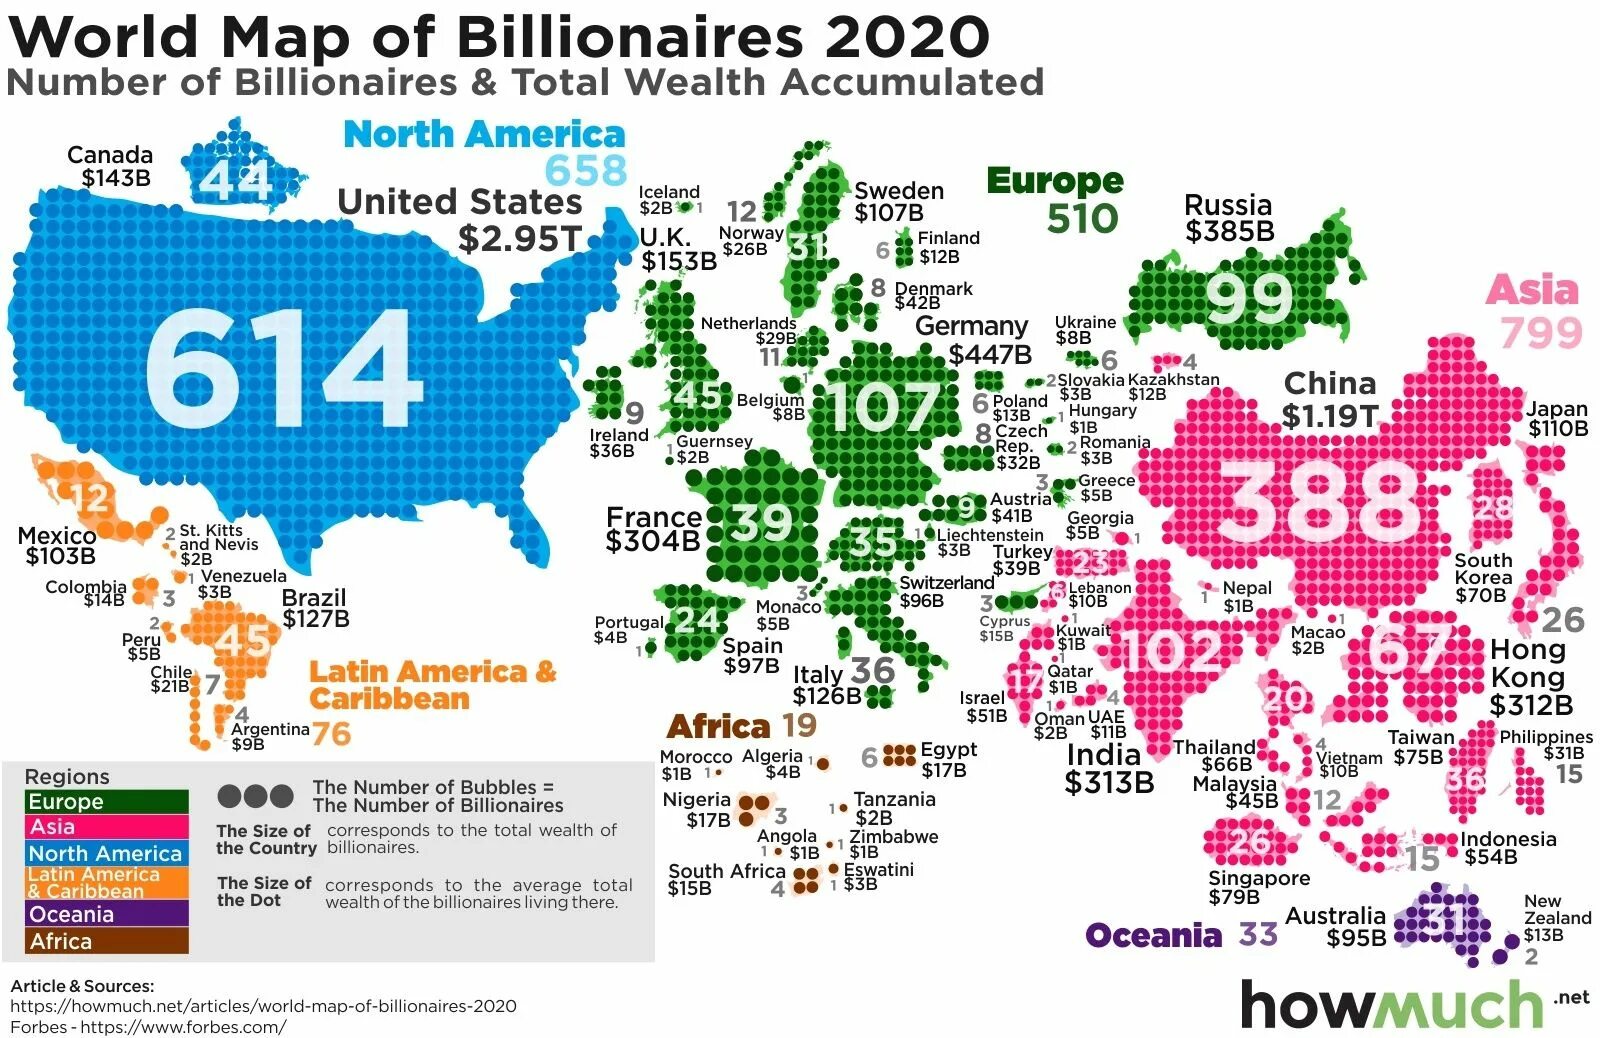 How many people in the world. Количество долларовых миллиардеров по странам. Количество миллиардеров по странам по годам. Количество миллиардеров по странам 2020. Количество миллиардеров долларовых миллиардеров по странам.